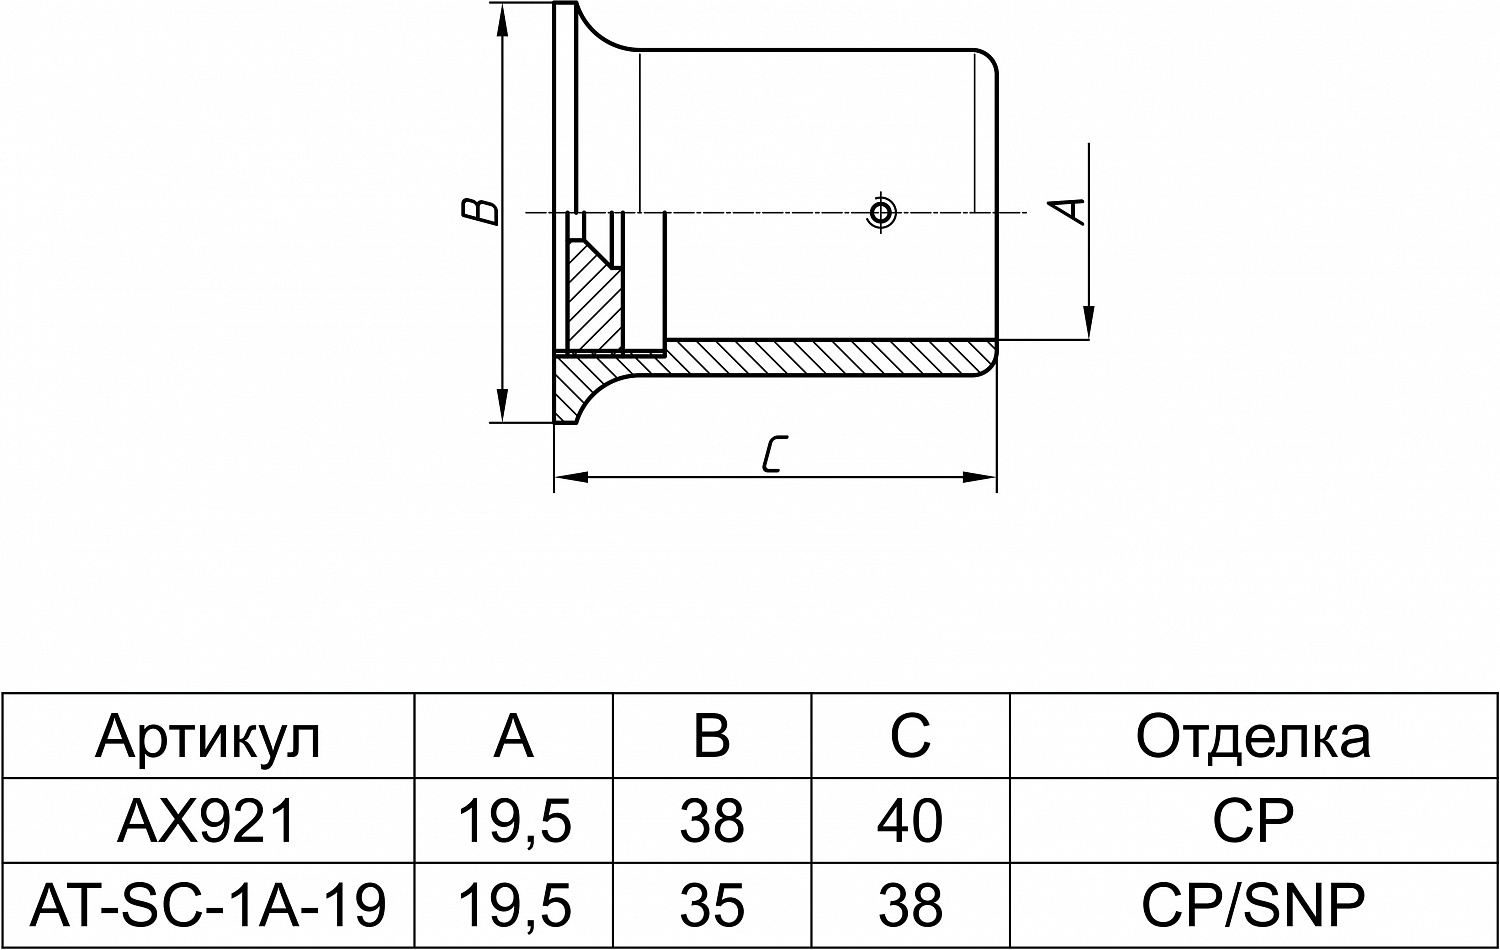 AX-921 крепеж трубы к стене 19мм (Zinc) CP?>